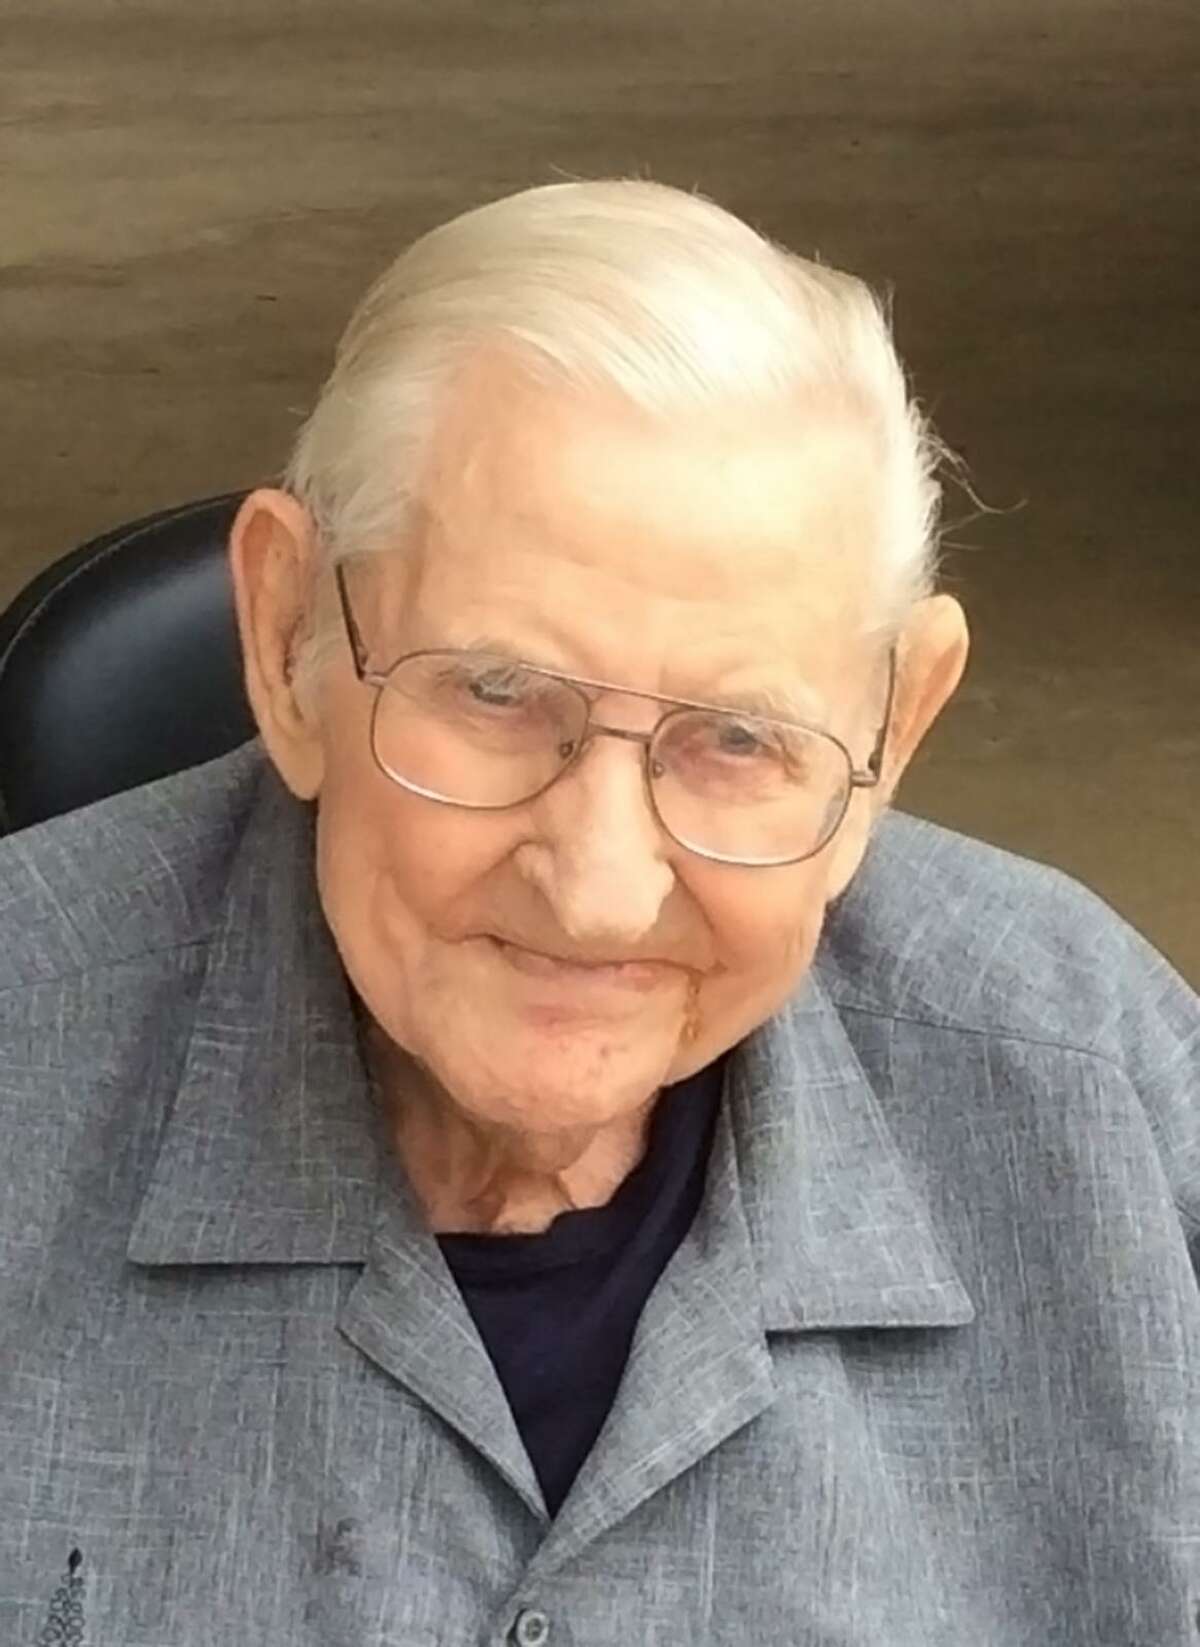 Glenn Taylor celebrated his 100th birthday on Feb. 22.